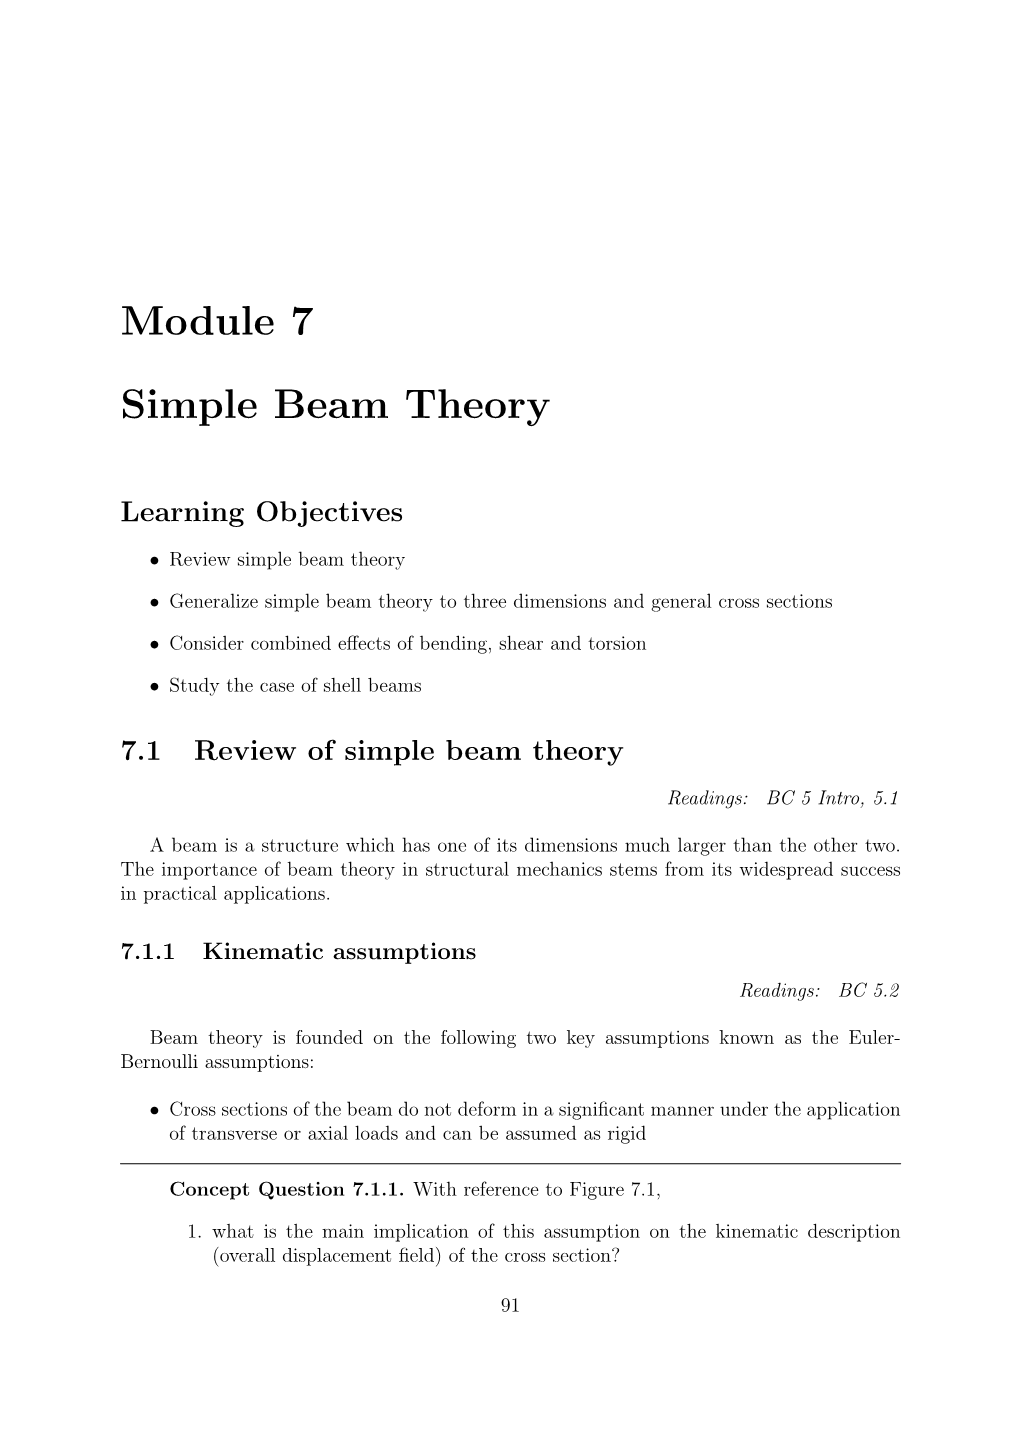 Module 7 Simple Beam Theory